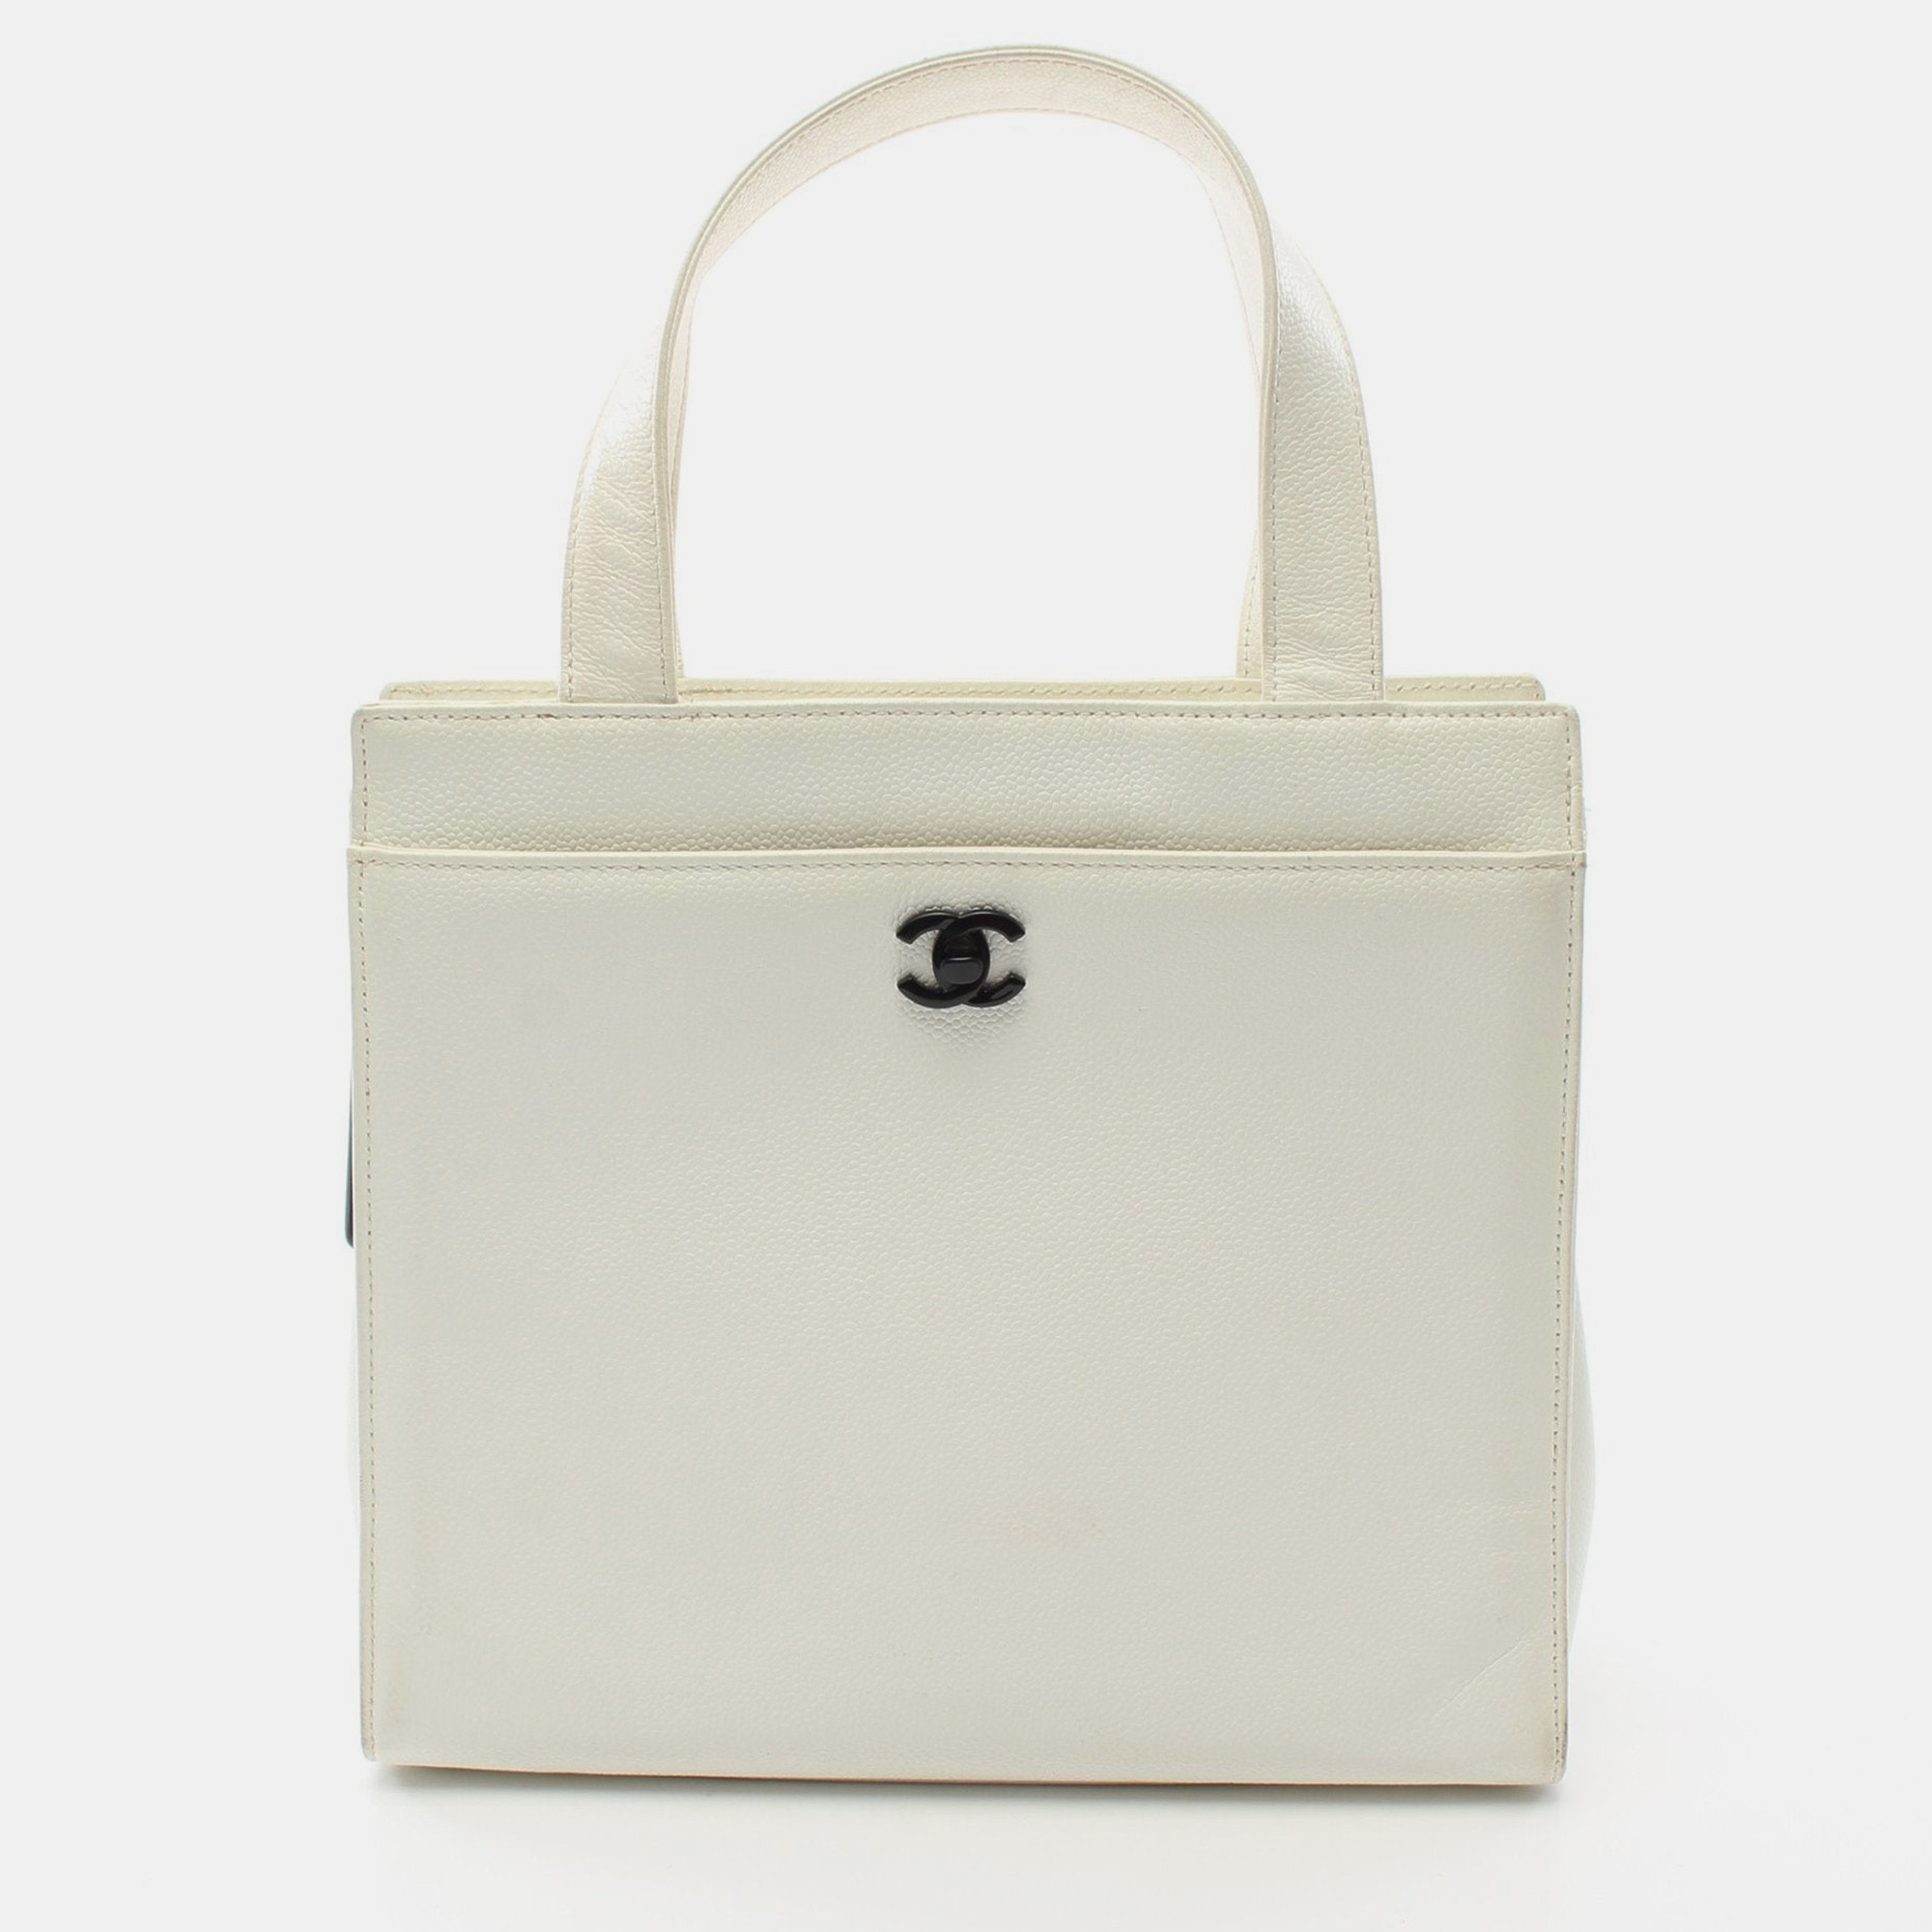 Chanel handbag caviar skin white black hardware